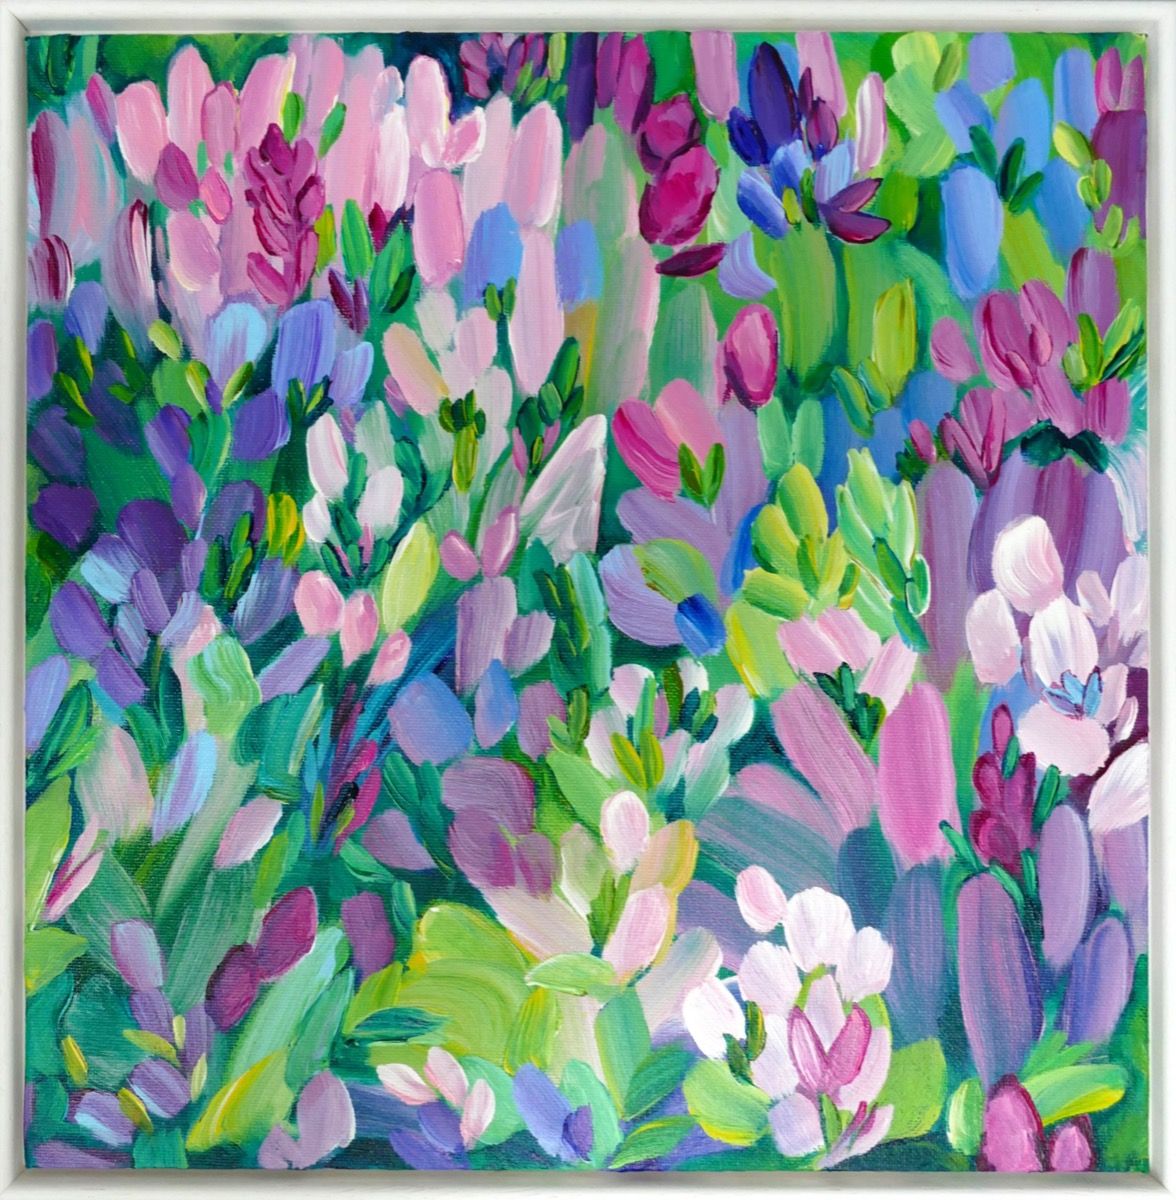 Wildflowers VII by Alanna Eakin